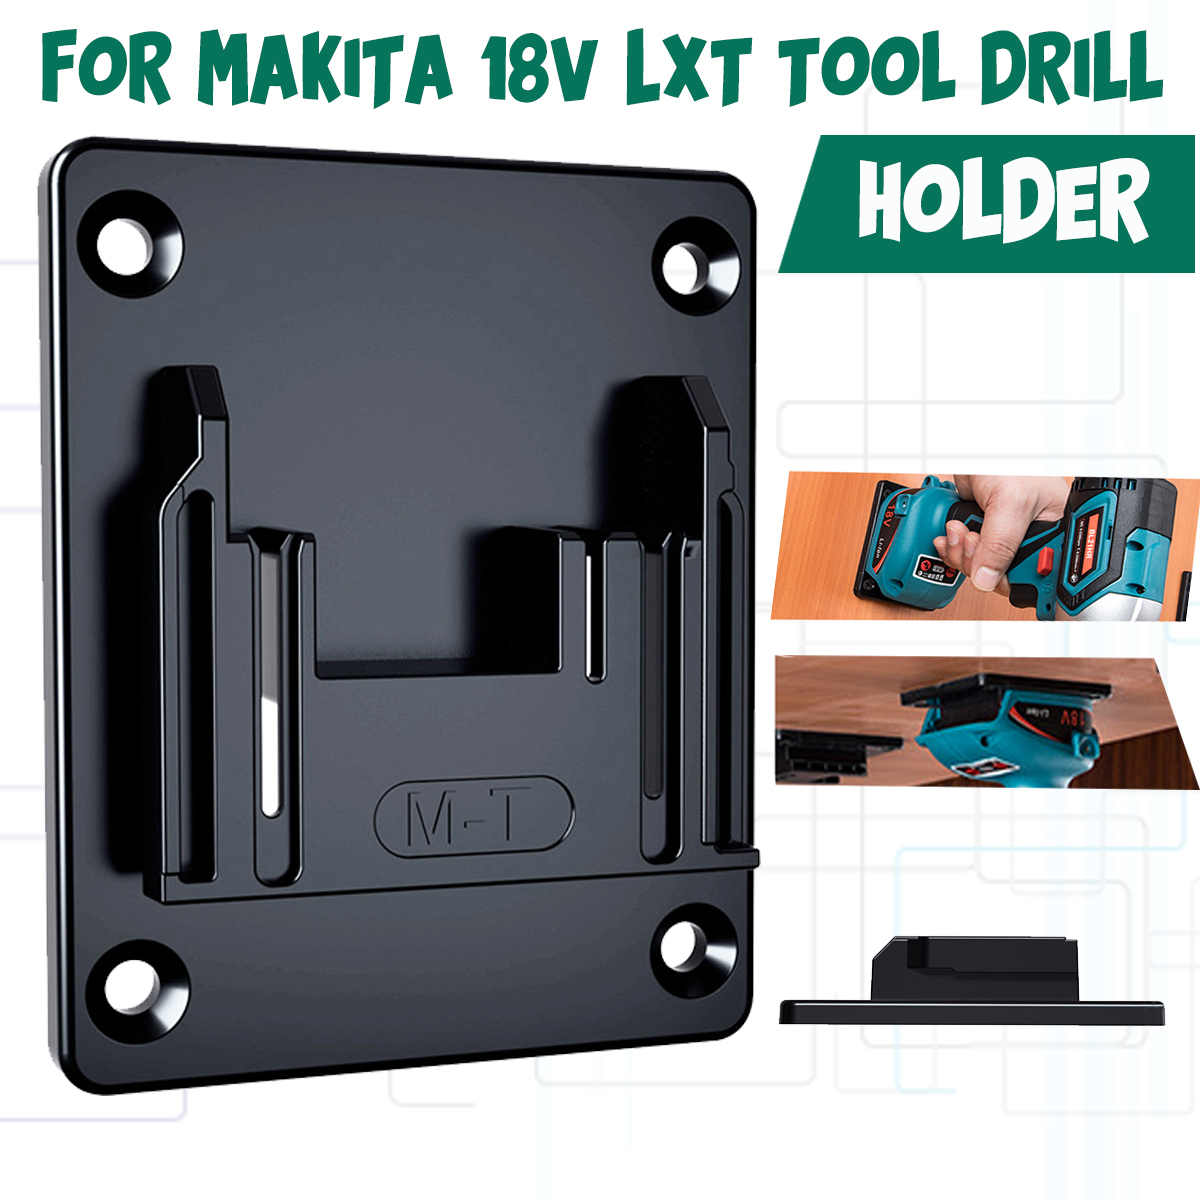 For Makita 18V LXT Tool Drill Holder Wall Mount Brackets Hook Storage Rack Van 